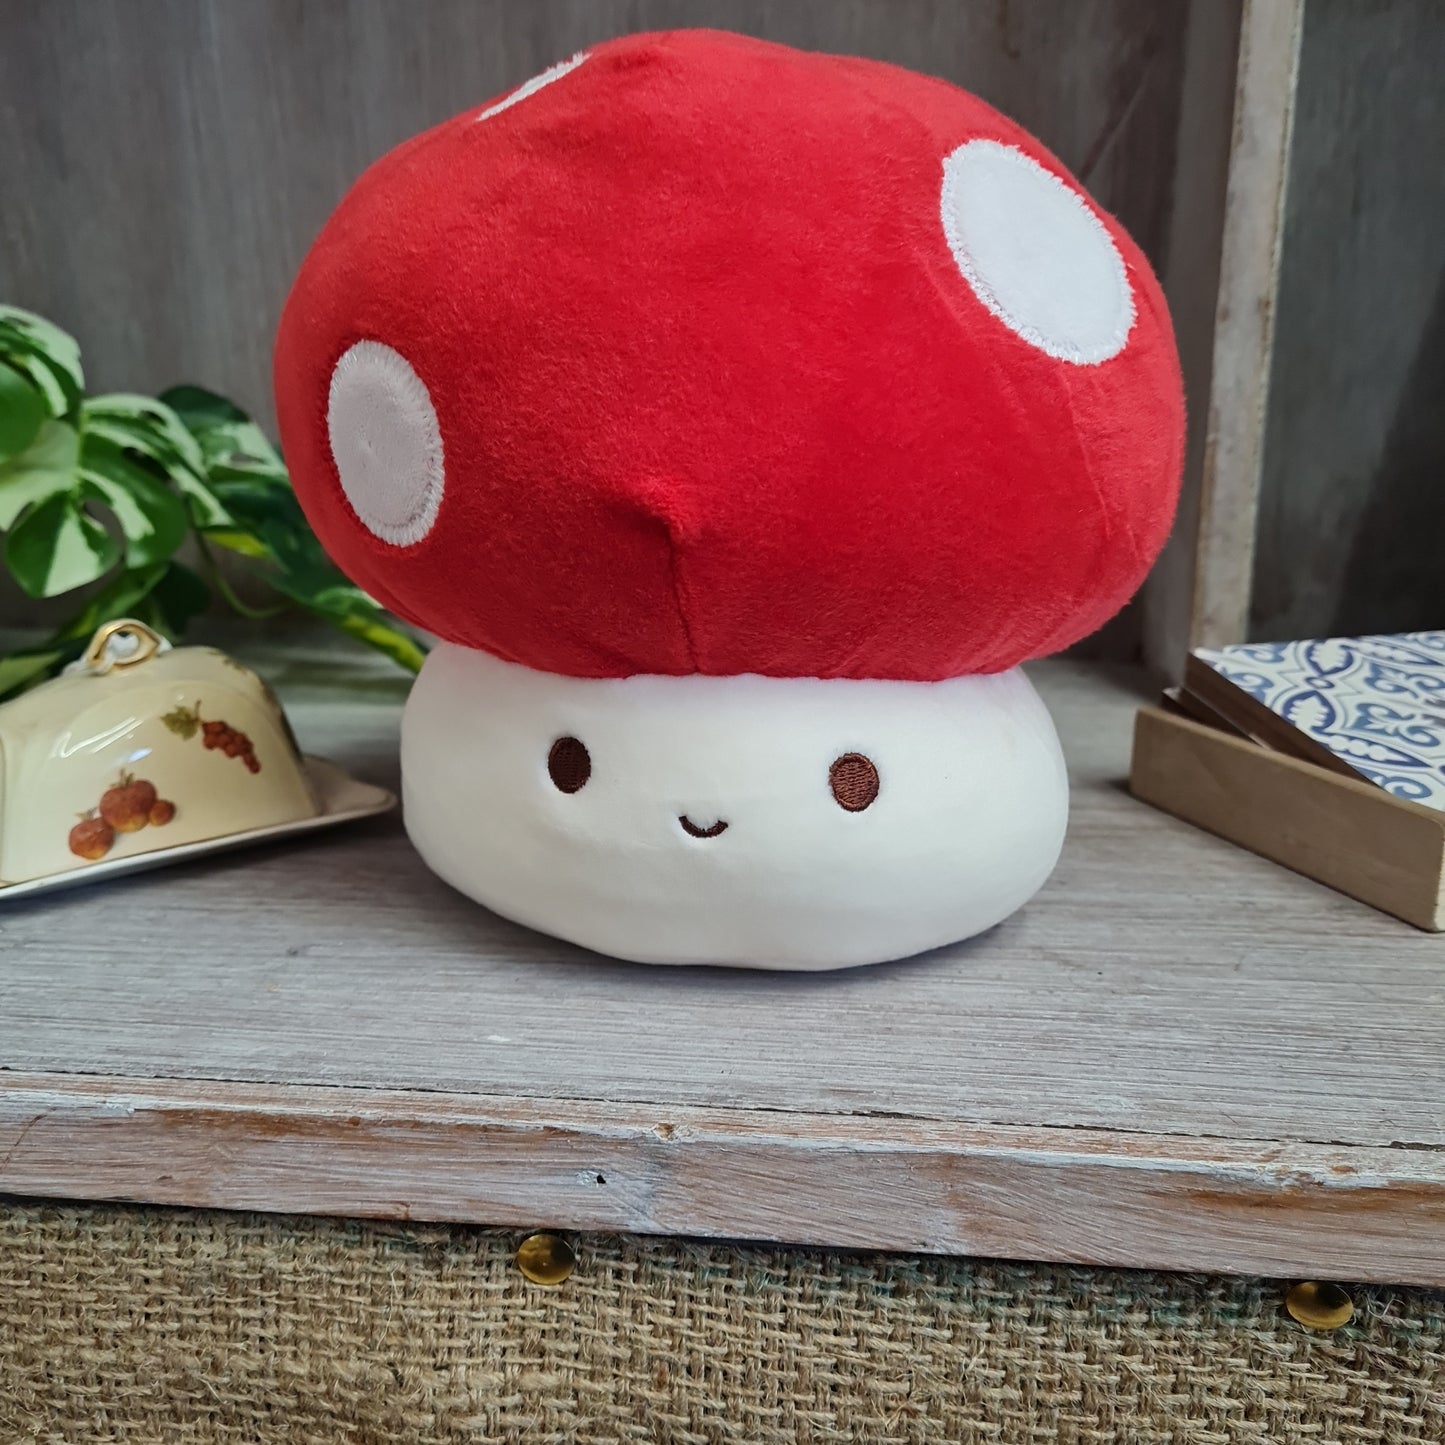 Squishy mushroom plush